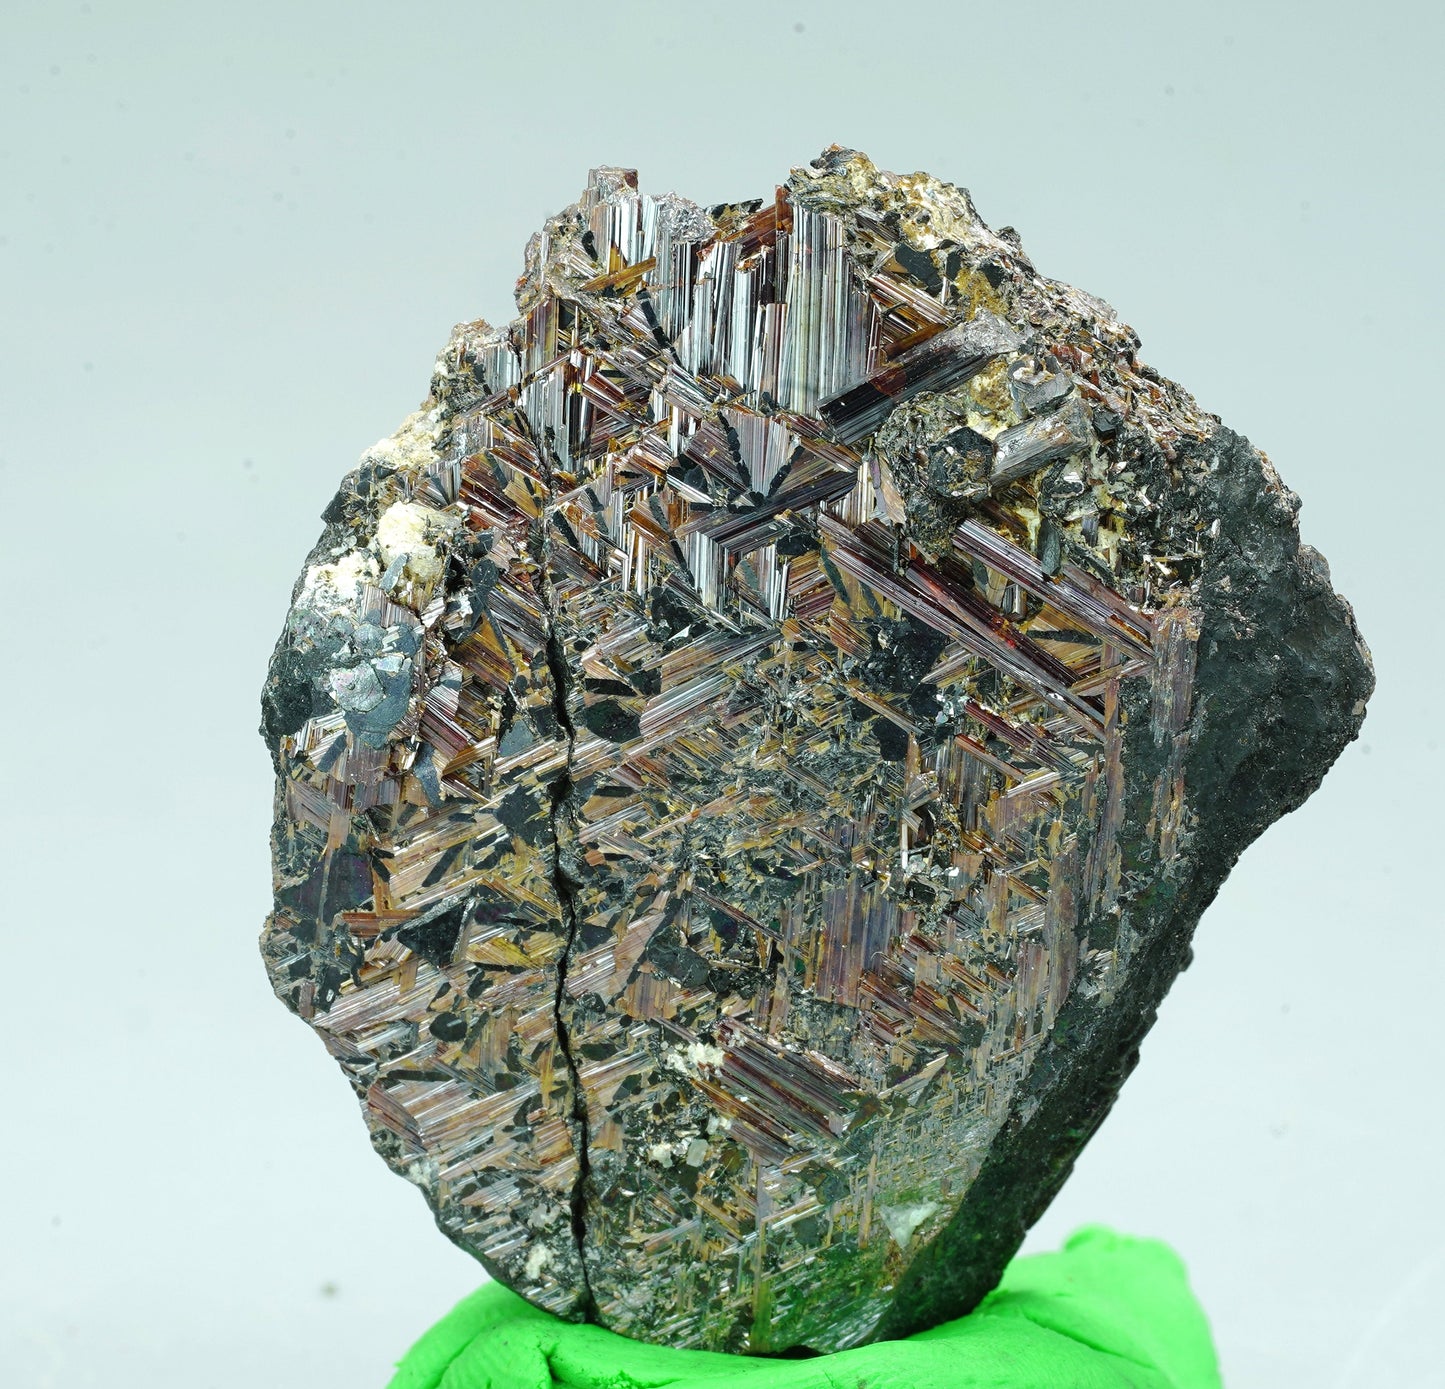 ARSAA GEMS AND MINERALS1x repaired Rutile var Sagenite on hamatite beautiful crystal from Zagi mountain KP Pakistan, 41.9 grams - Premium  from ARSAA GEMS AND MINERALS - Just $75.00! Shop now at ARSAA GEMS AND MINERALS